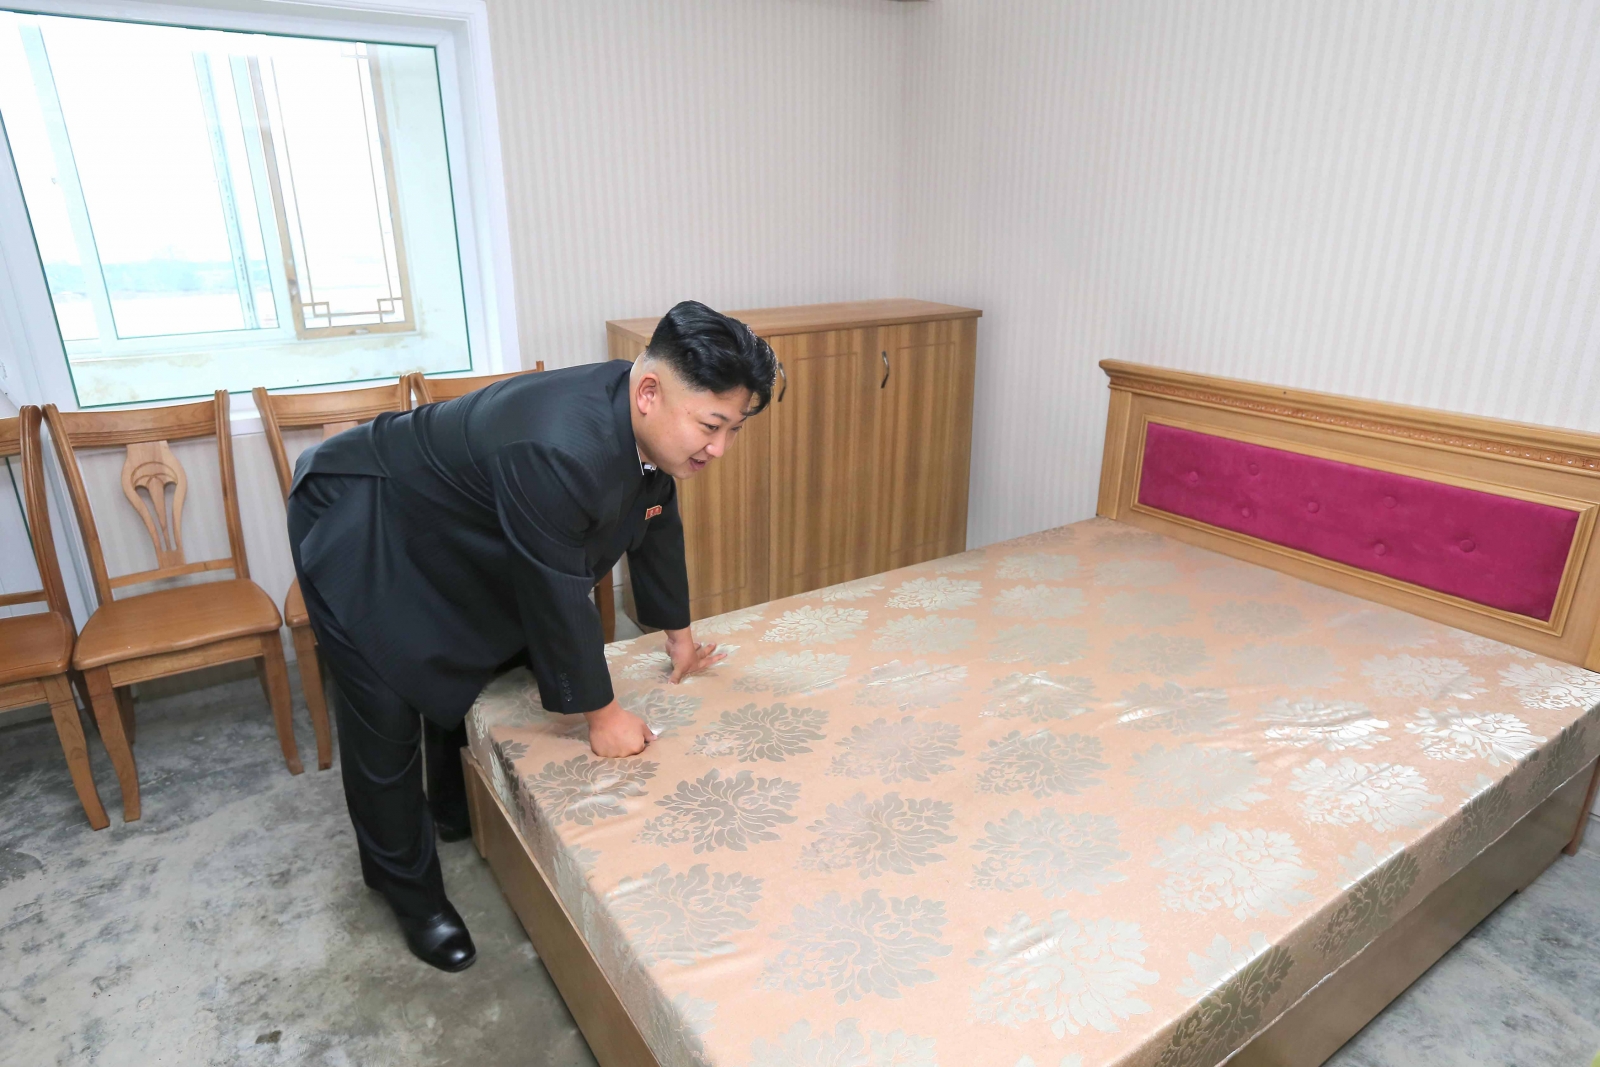 Kim Jong Un inspects a scientists bed